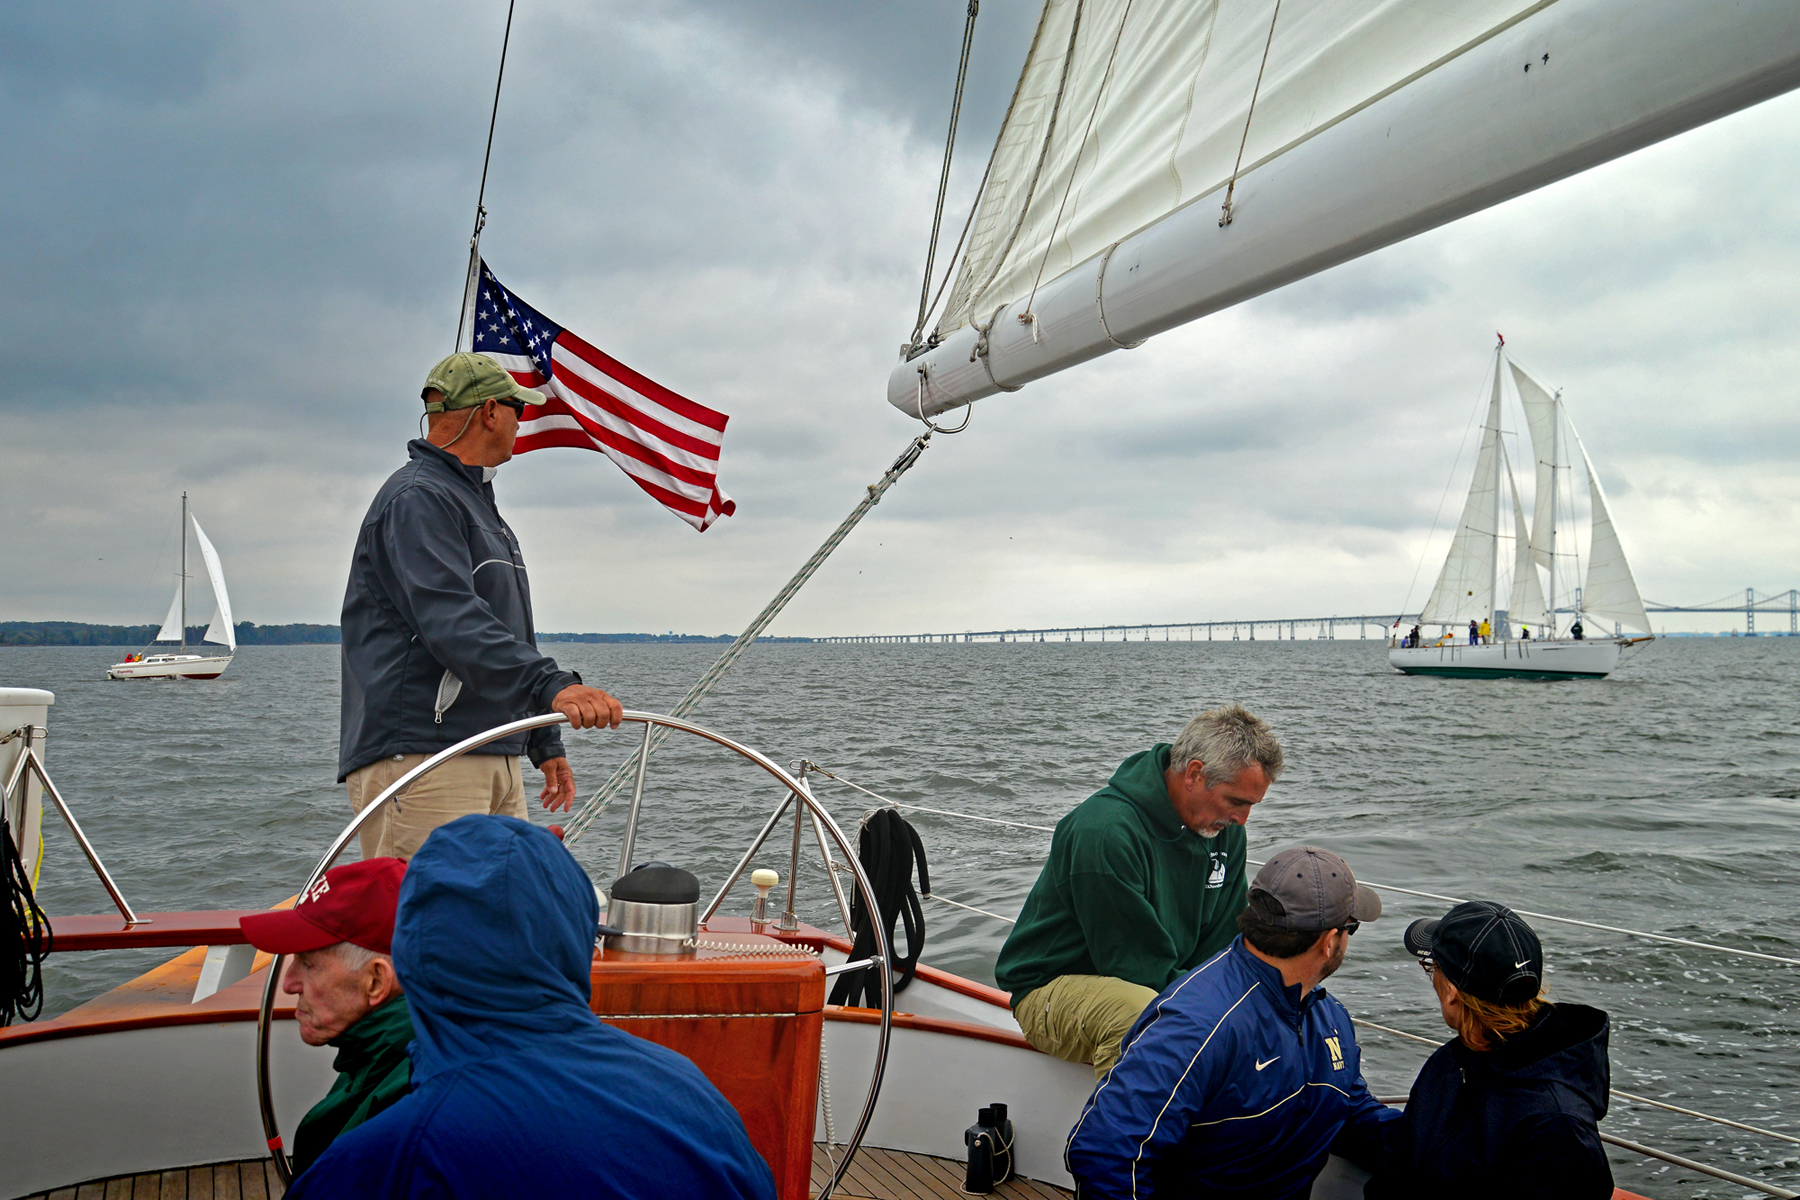 Watching the beginning of the Great Chesapeake Schooner Race